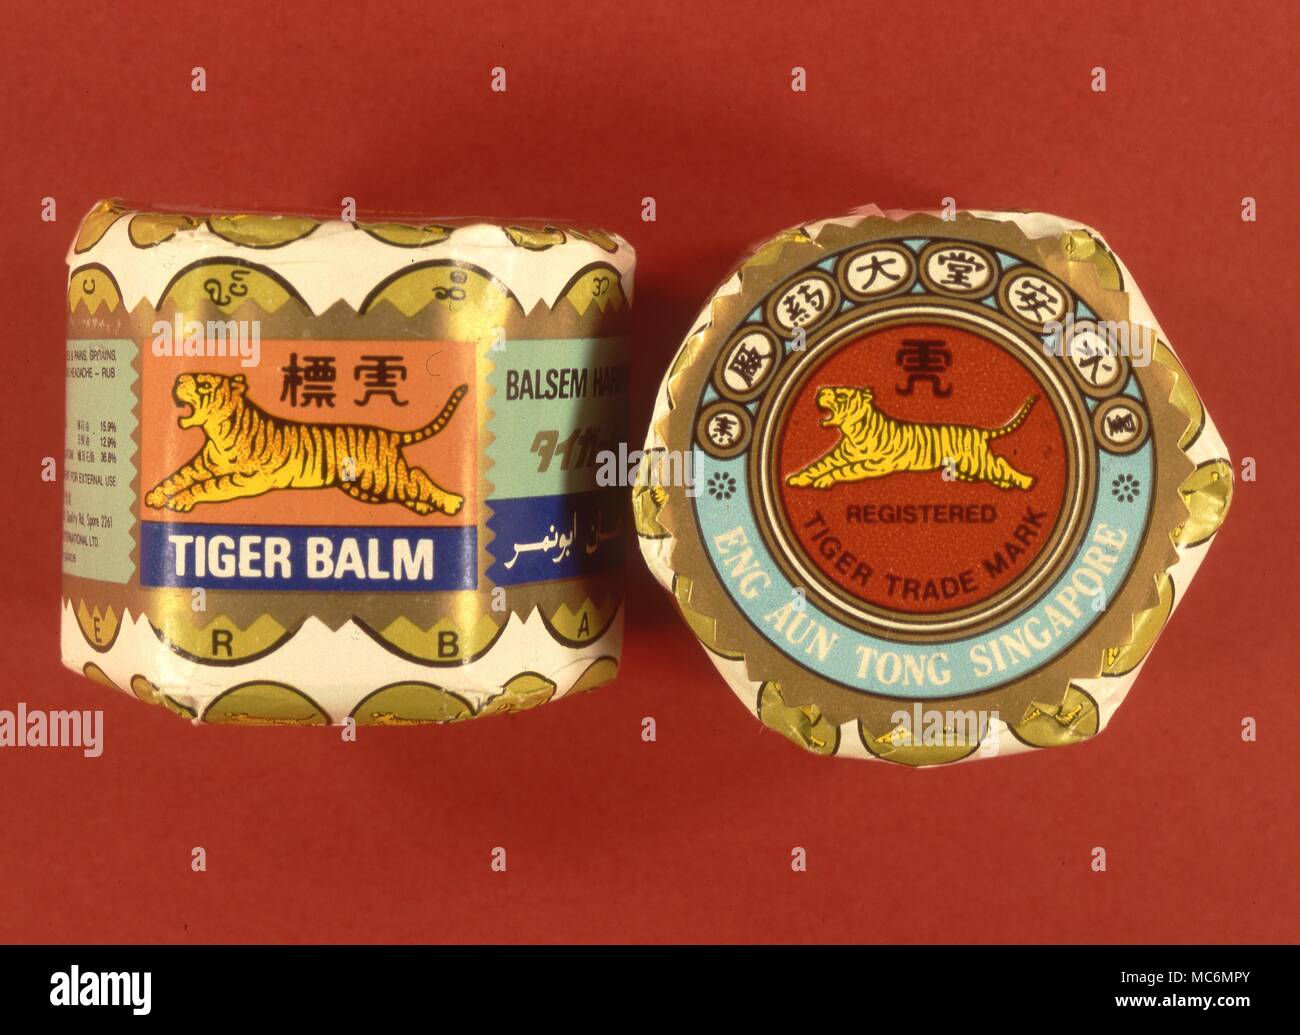 The original tiger balm oil for massage. Stock Photo